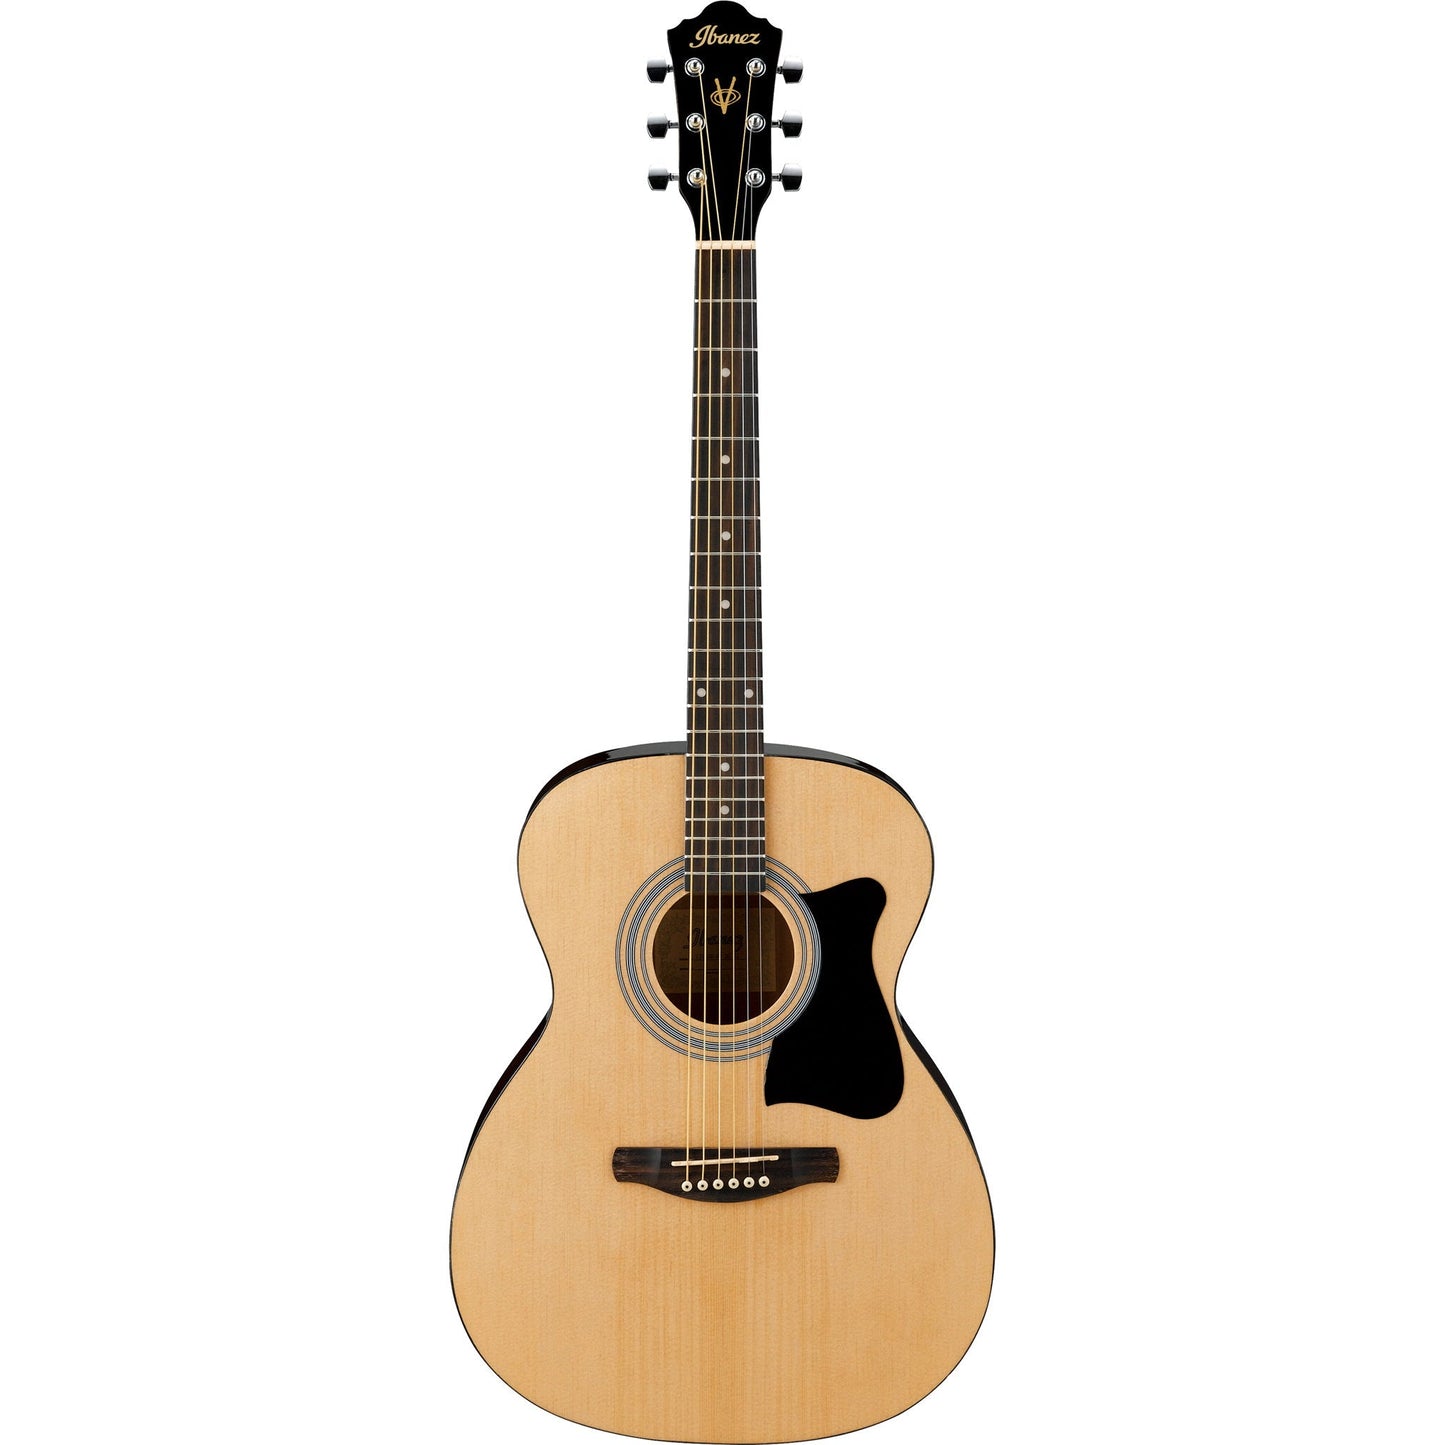 Ibanez IJVC50 JAMPACK Acoustic Guitar Package (Natural)